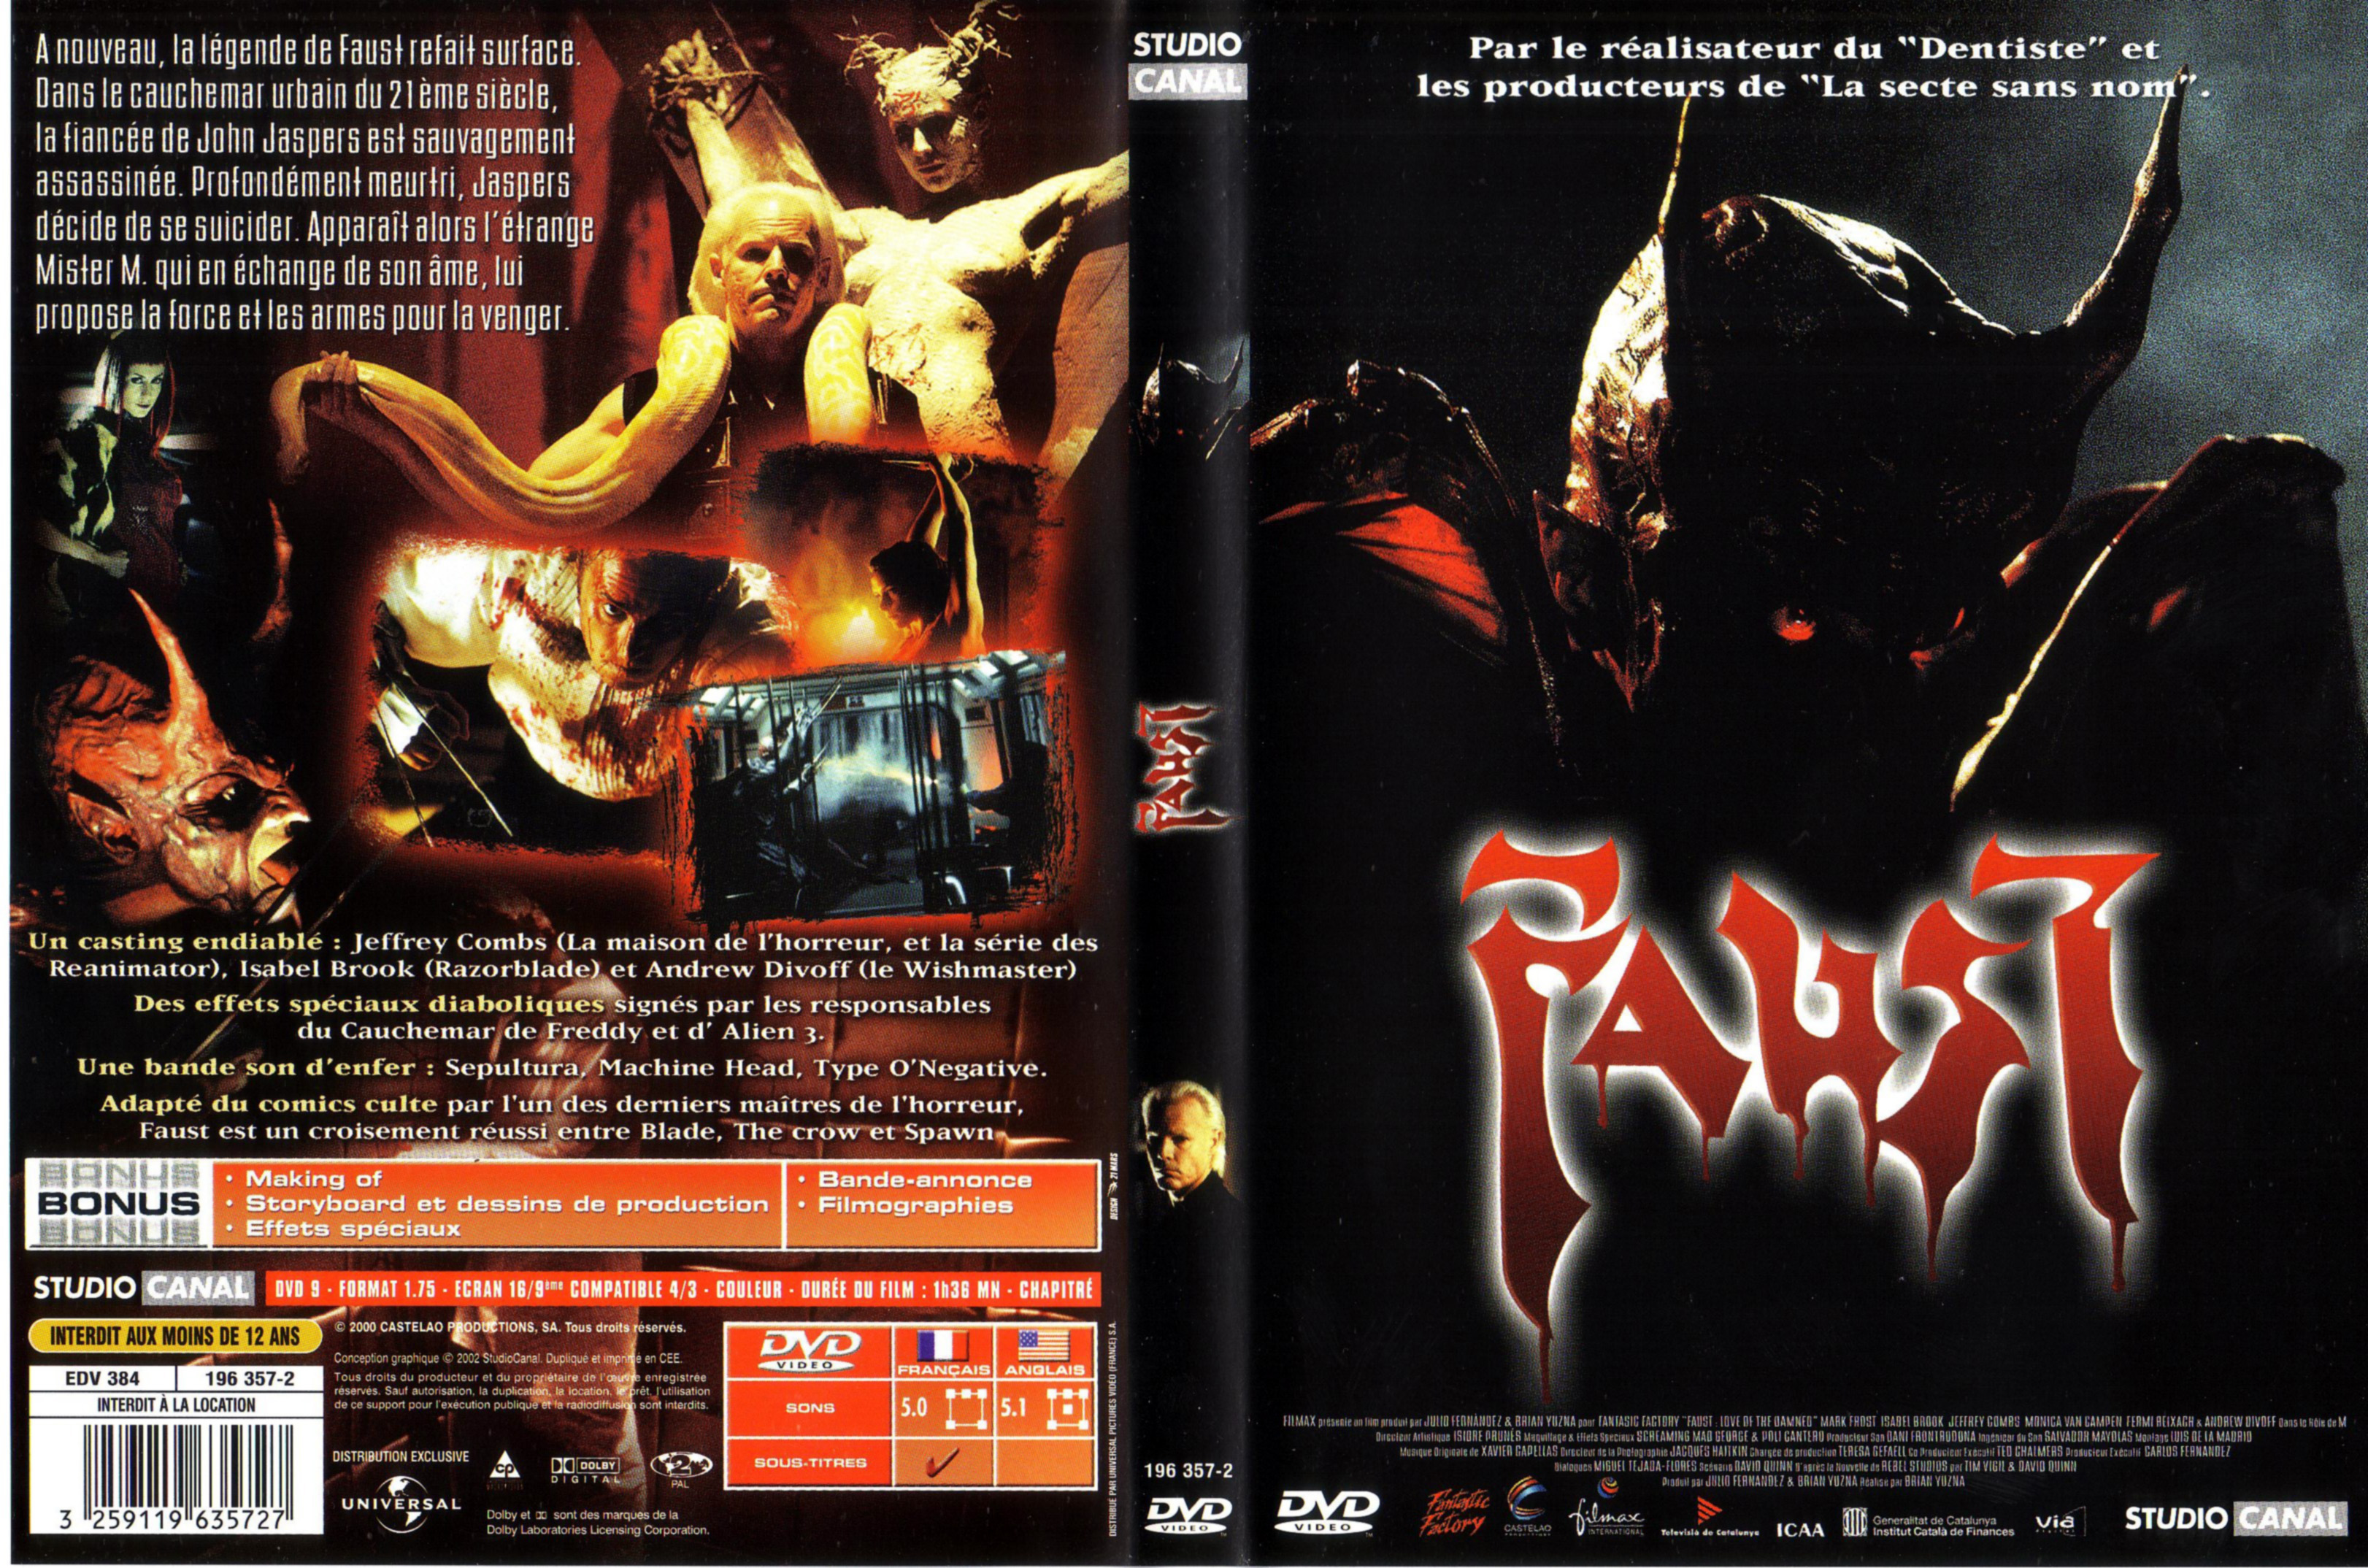 Jaquette DVD Faust v2